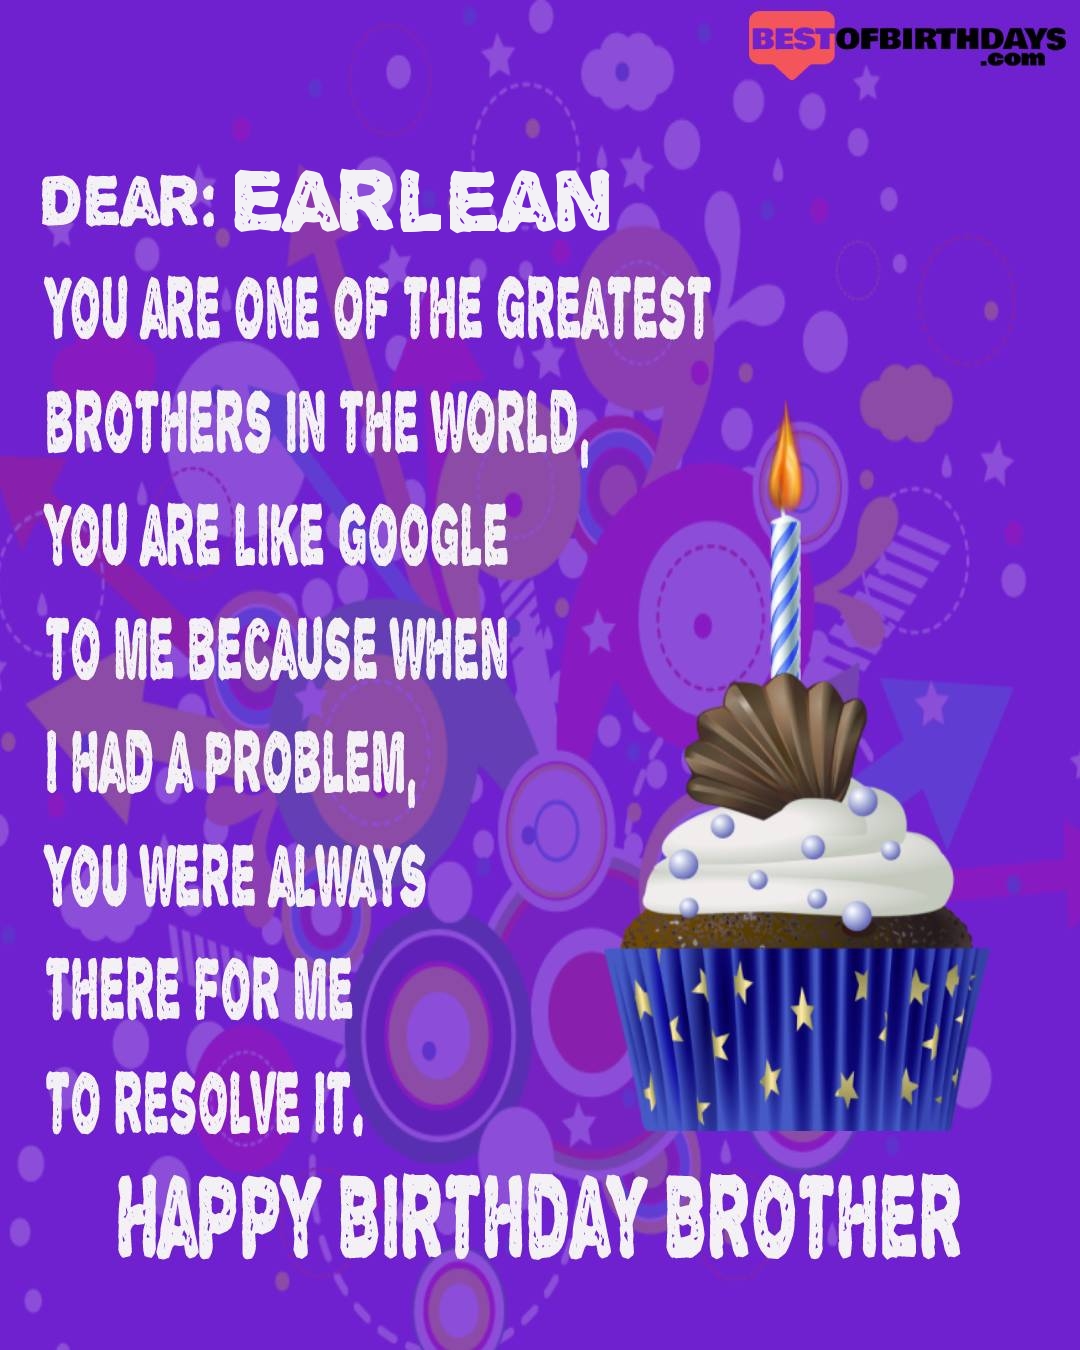 Happy birthday earlean bhai brother bro